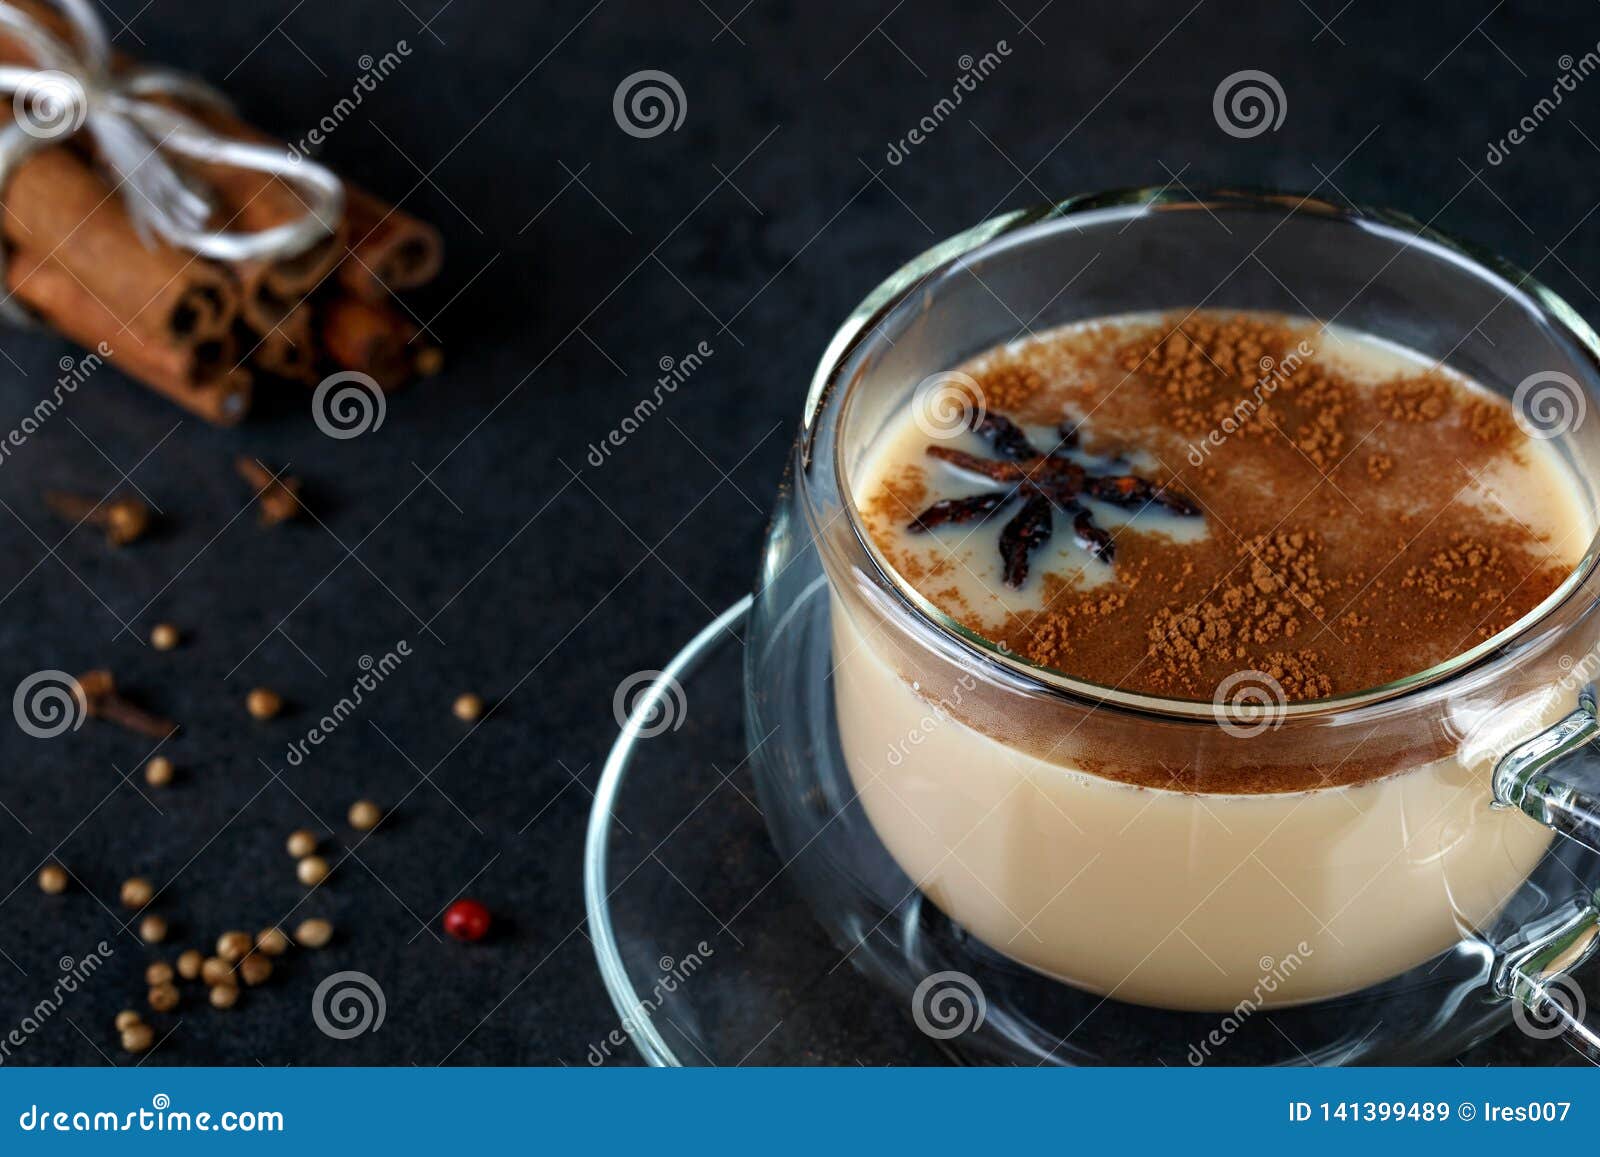 Indian Masala Tea stock image. Image of chai, drink - 141399489